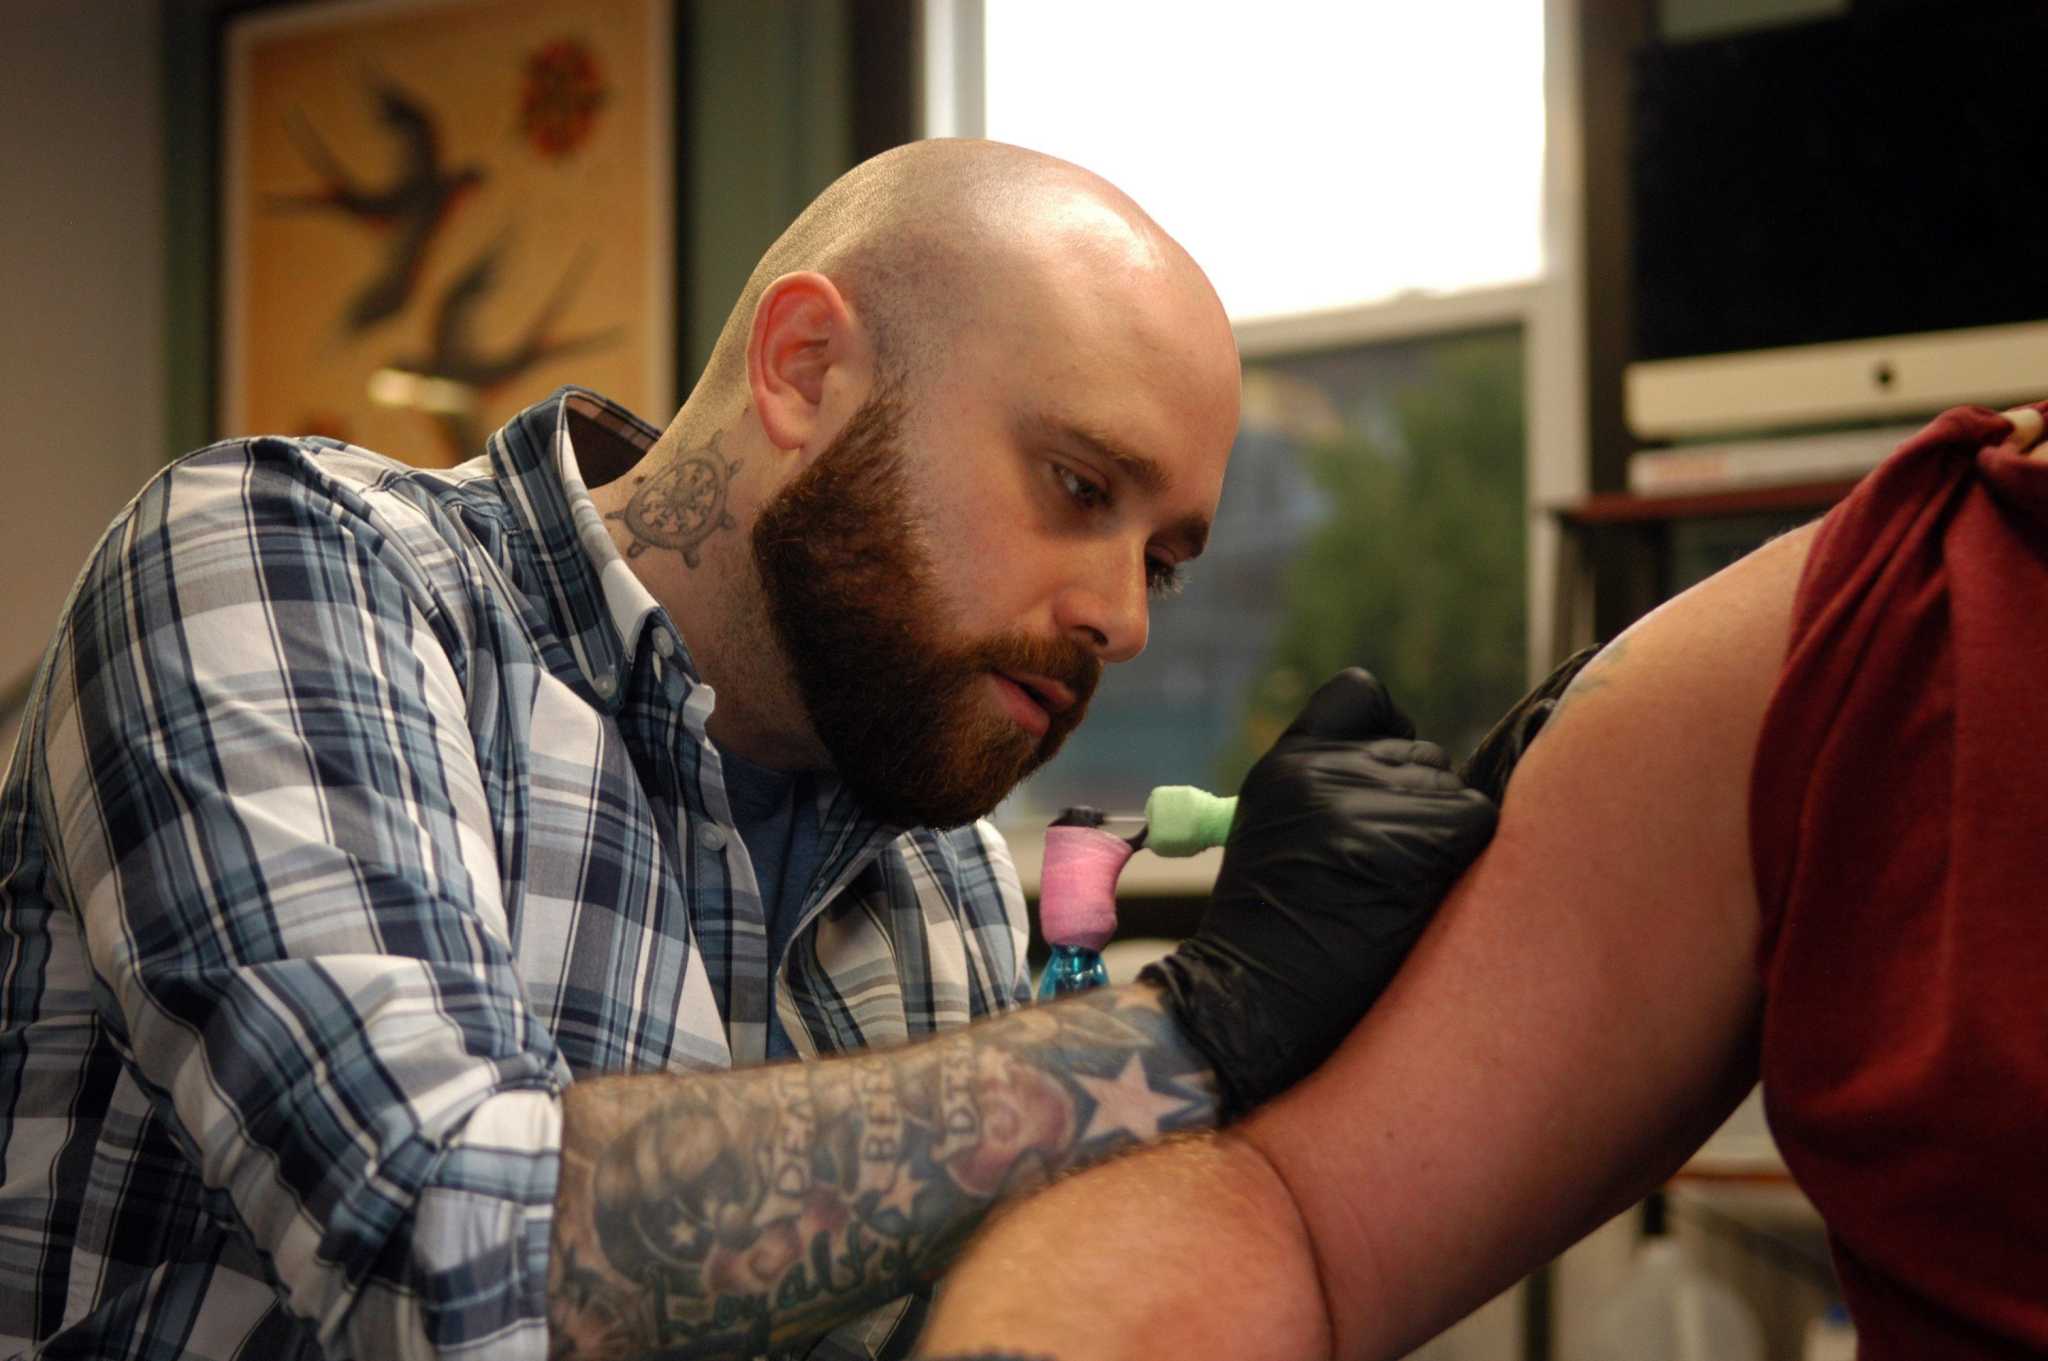 Danbury wants to redraw tattoo law